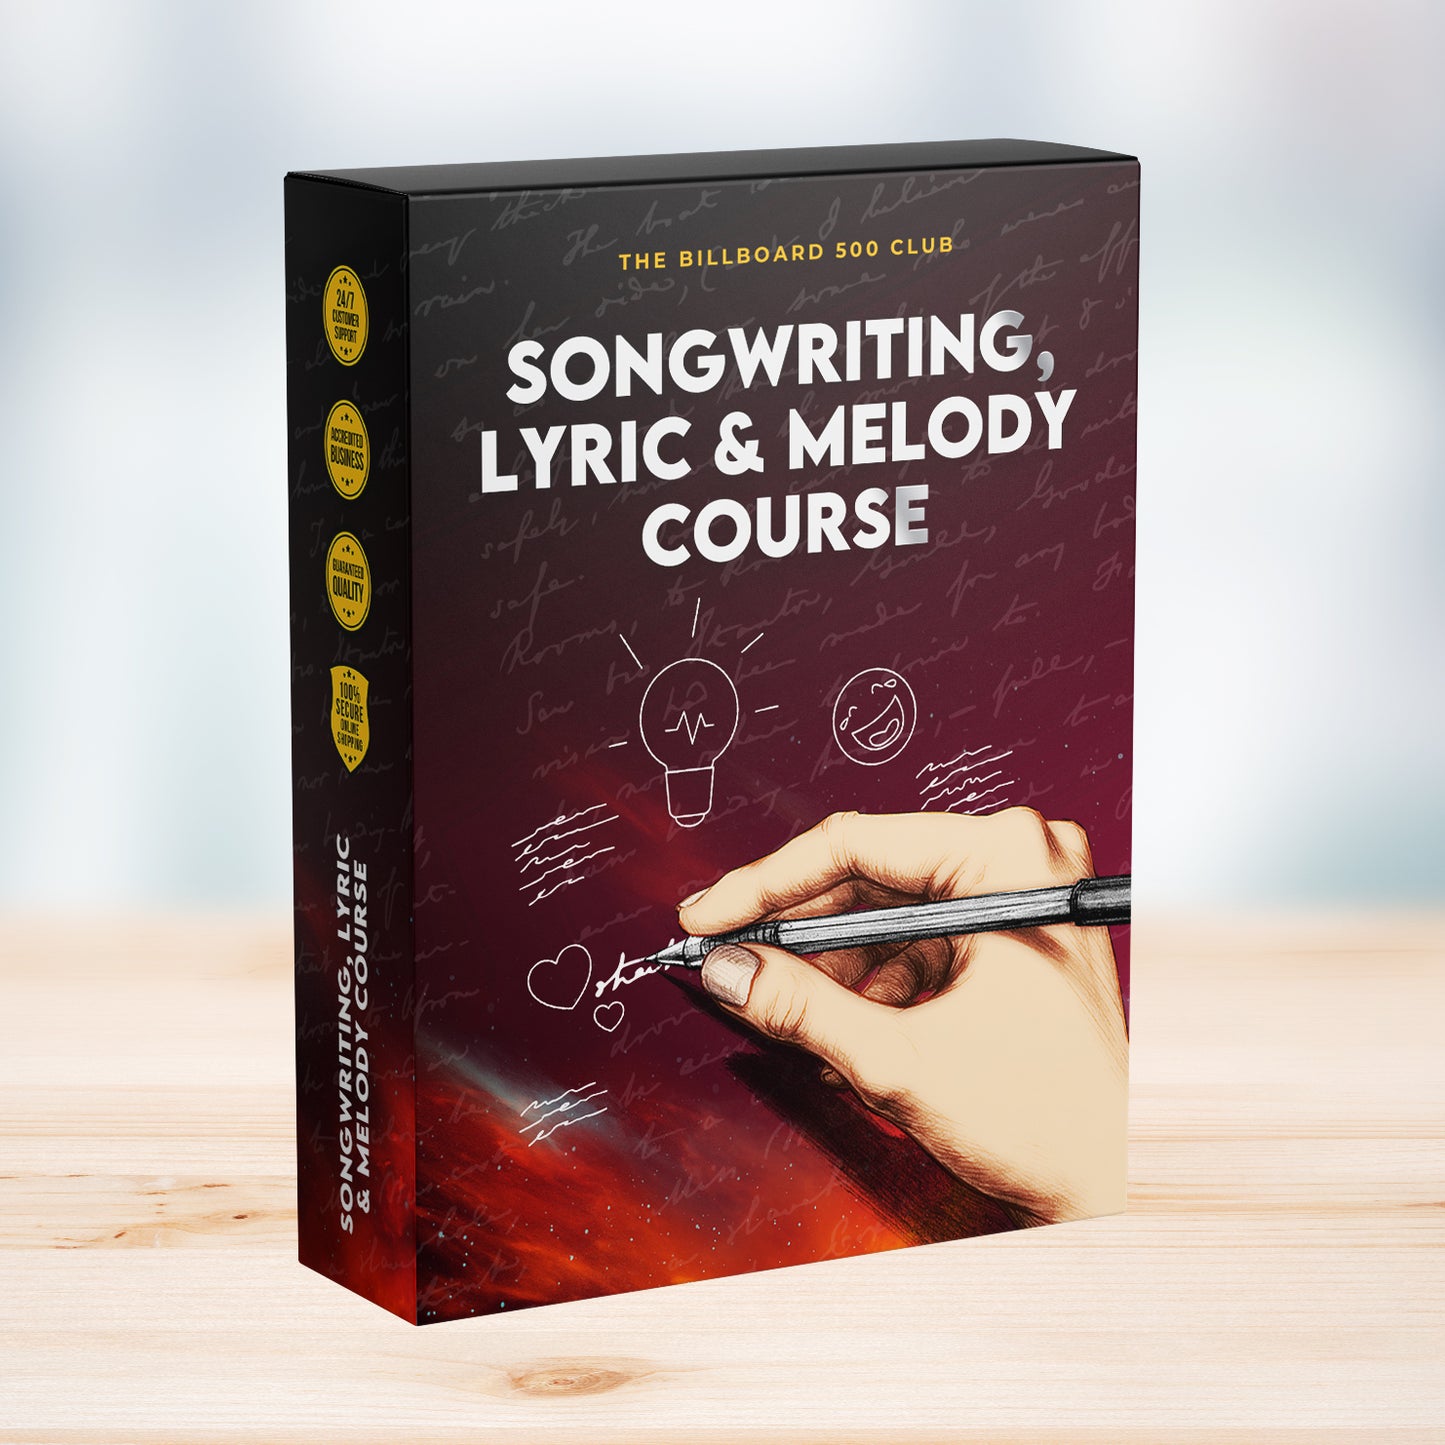 Songwriting, Lyric & Melody Course - The Billboard 500 Club